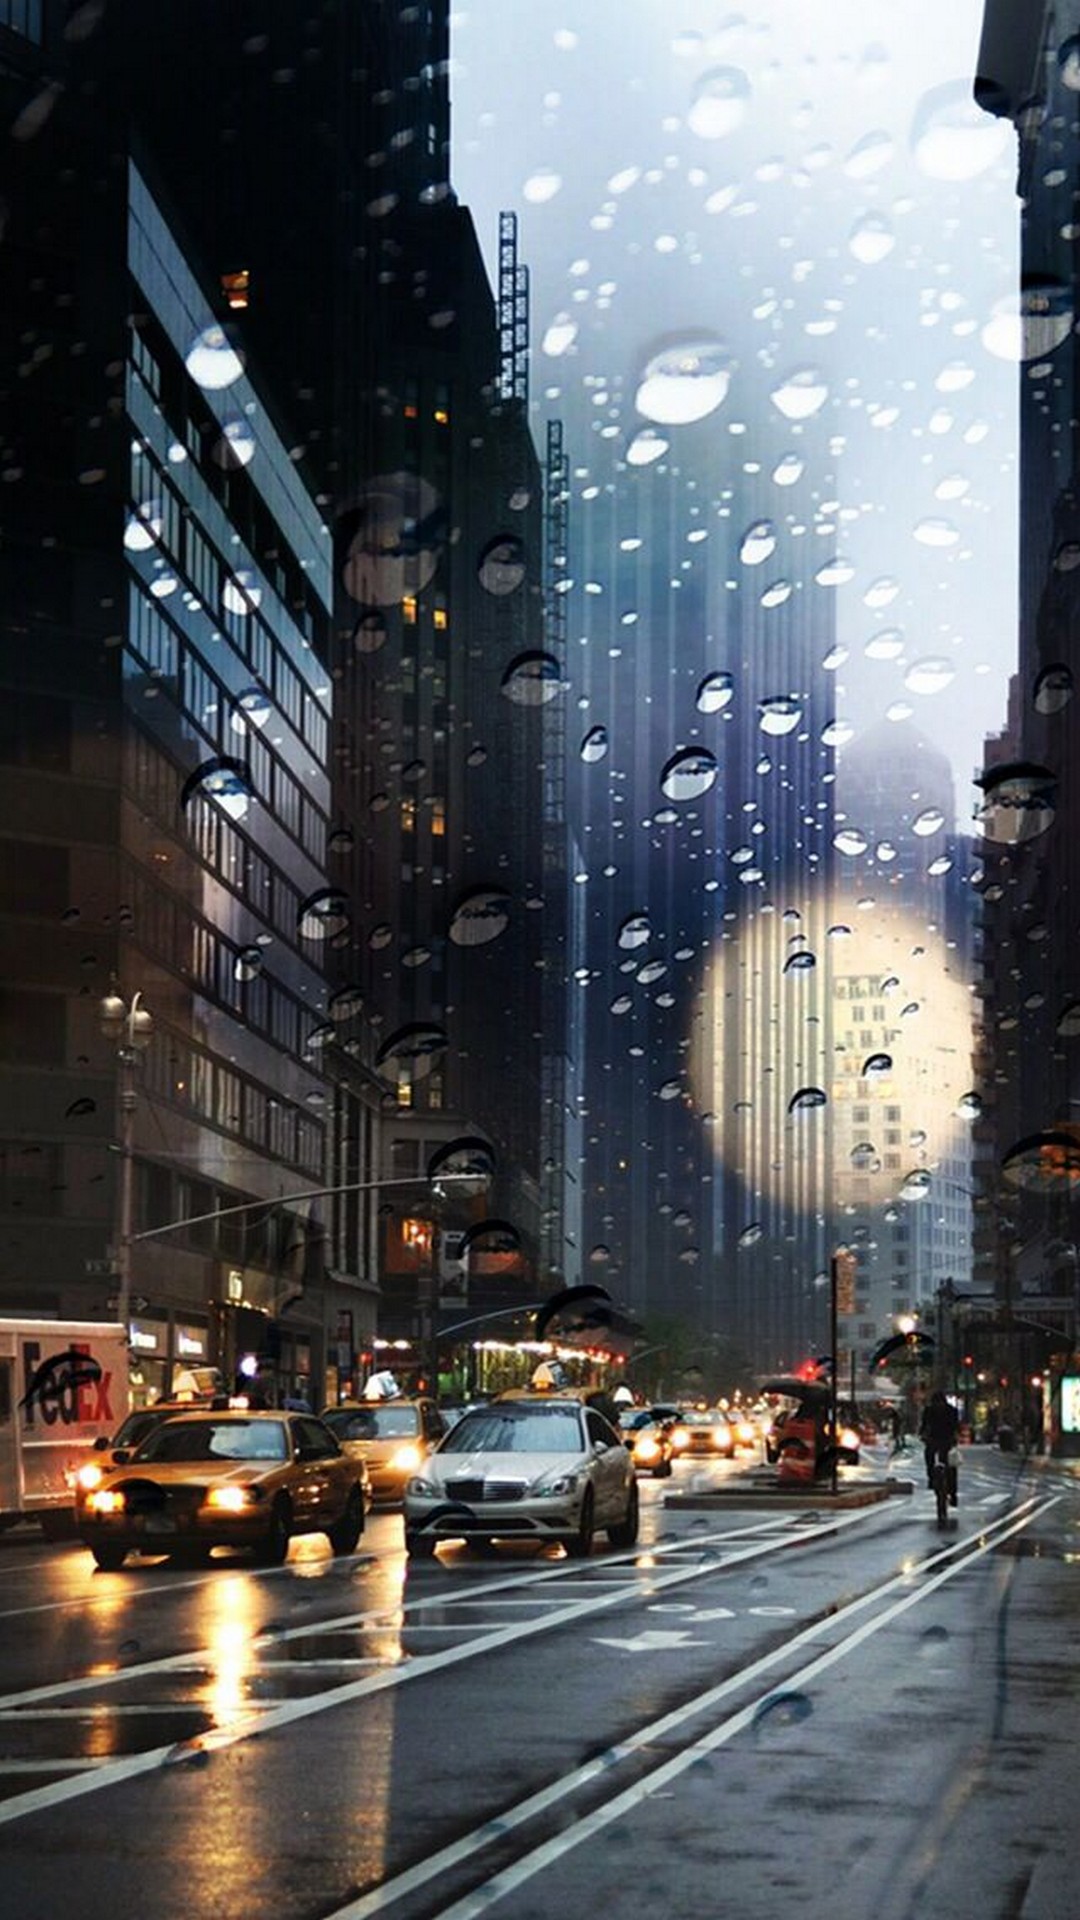 City Rain iPhone wallpaper resolution 1080x1920